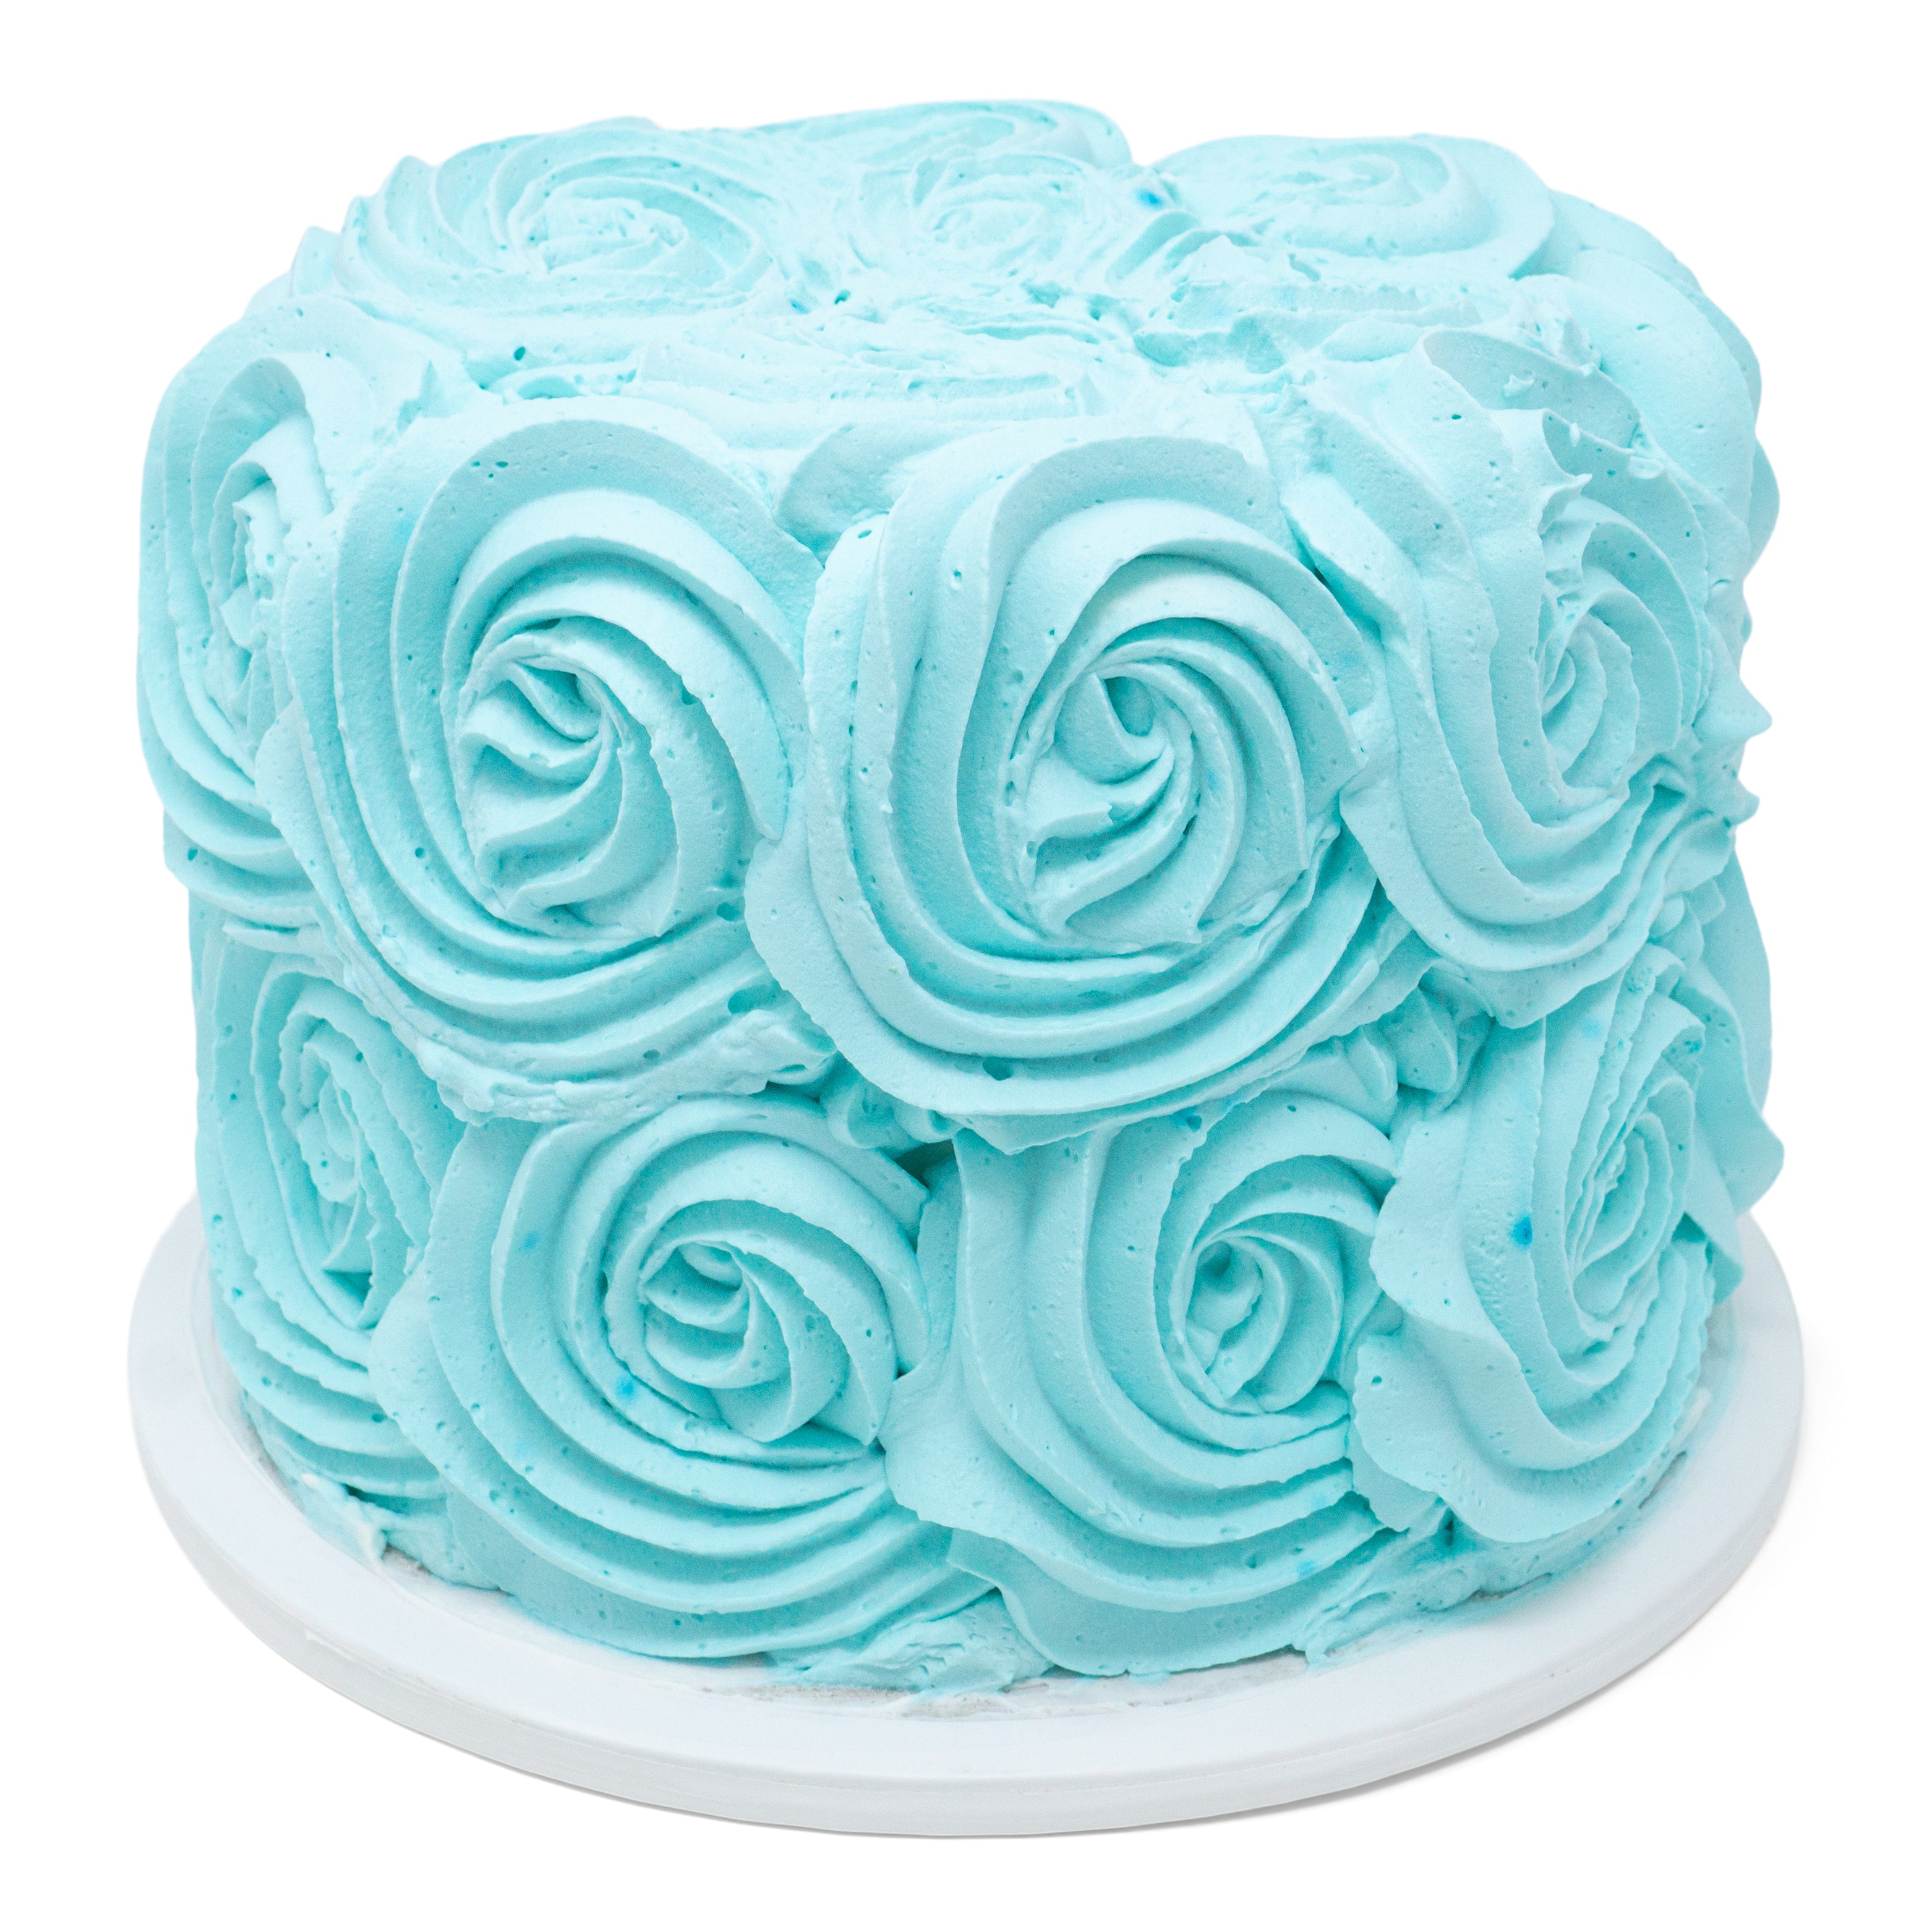 6”x 2 Layer Basic Rosette Cake | Your Sweet Affair